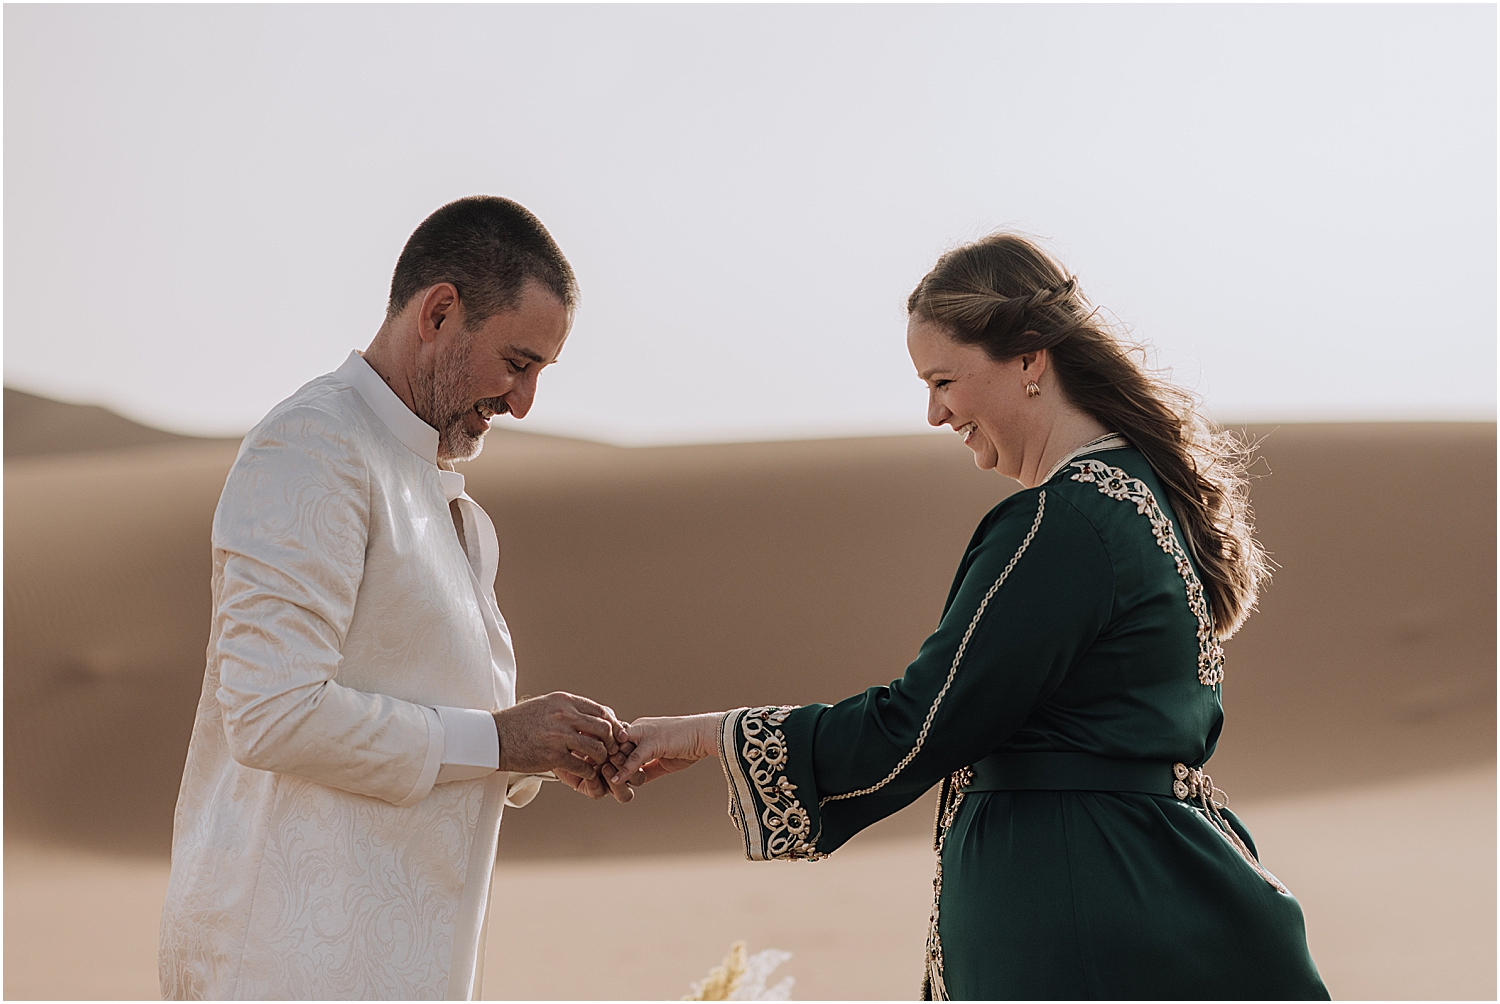 adventurous sahara desert elopement in morocco